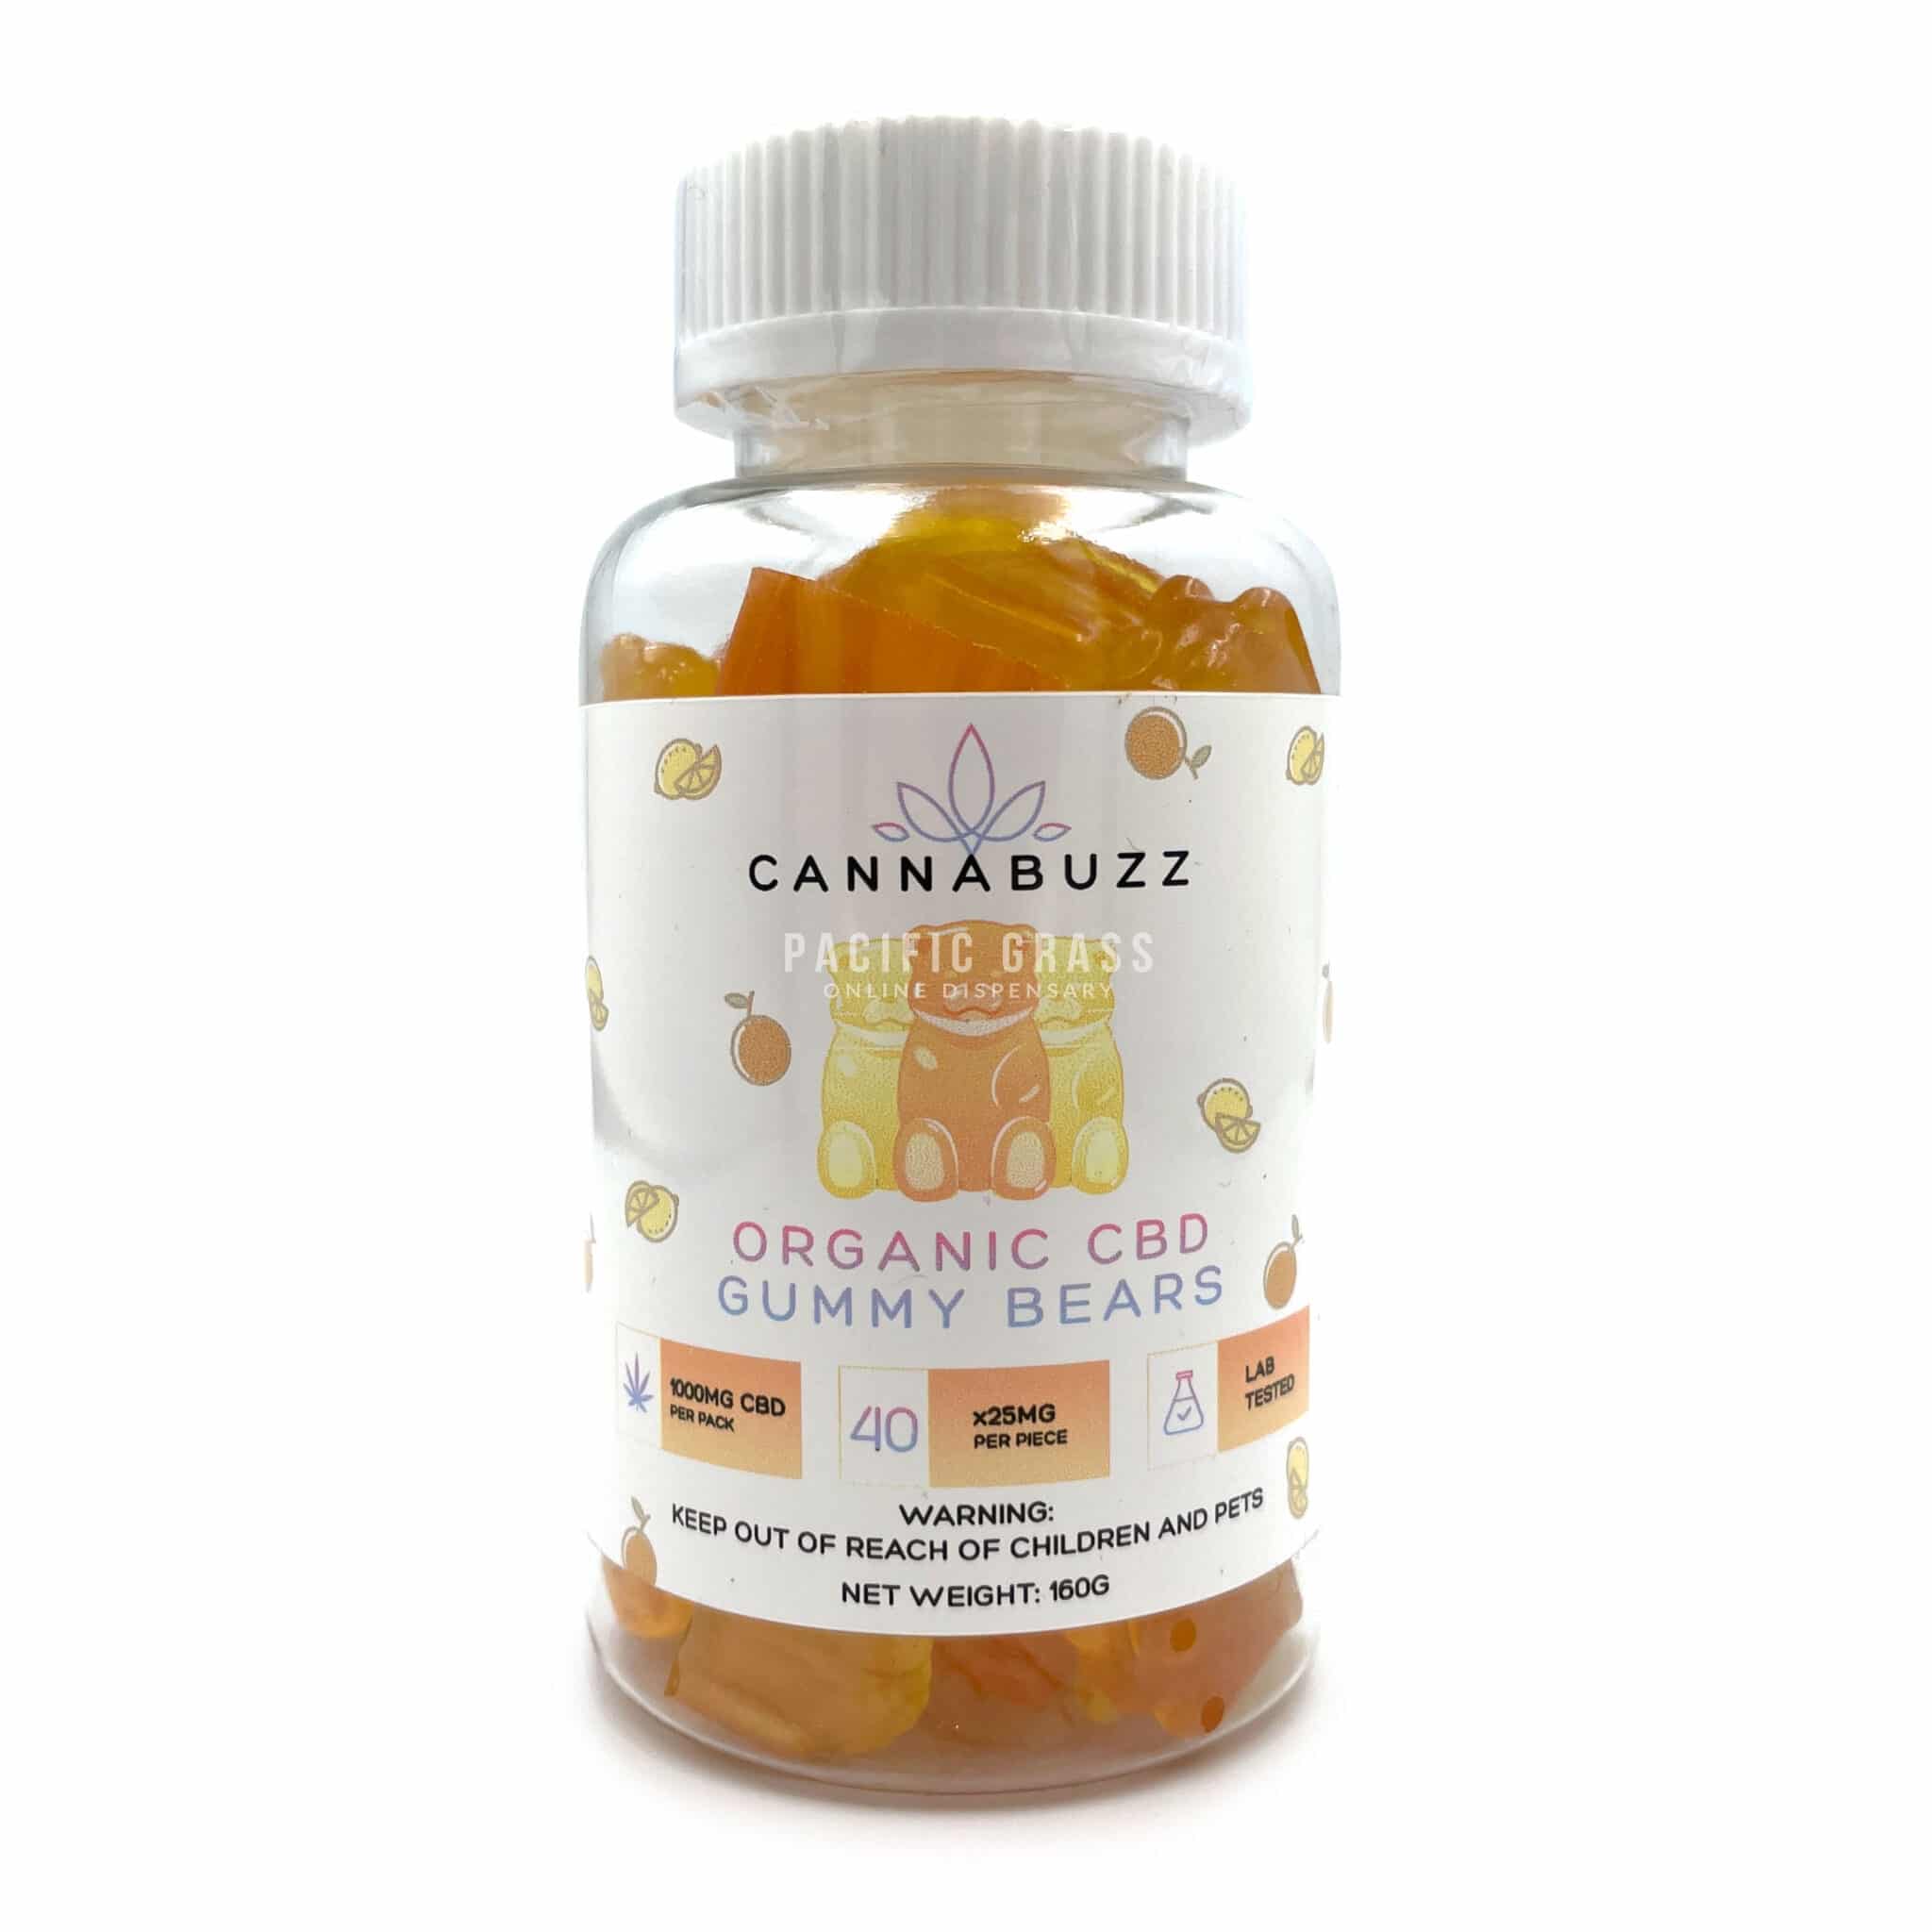 Cannabuzz organic cbd gummy bears